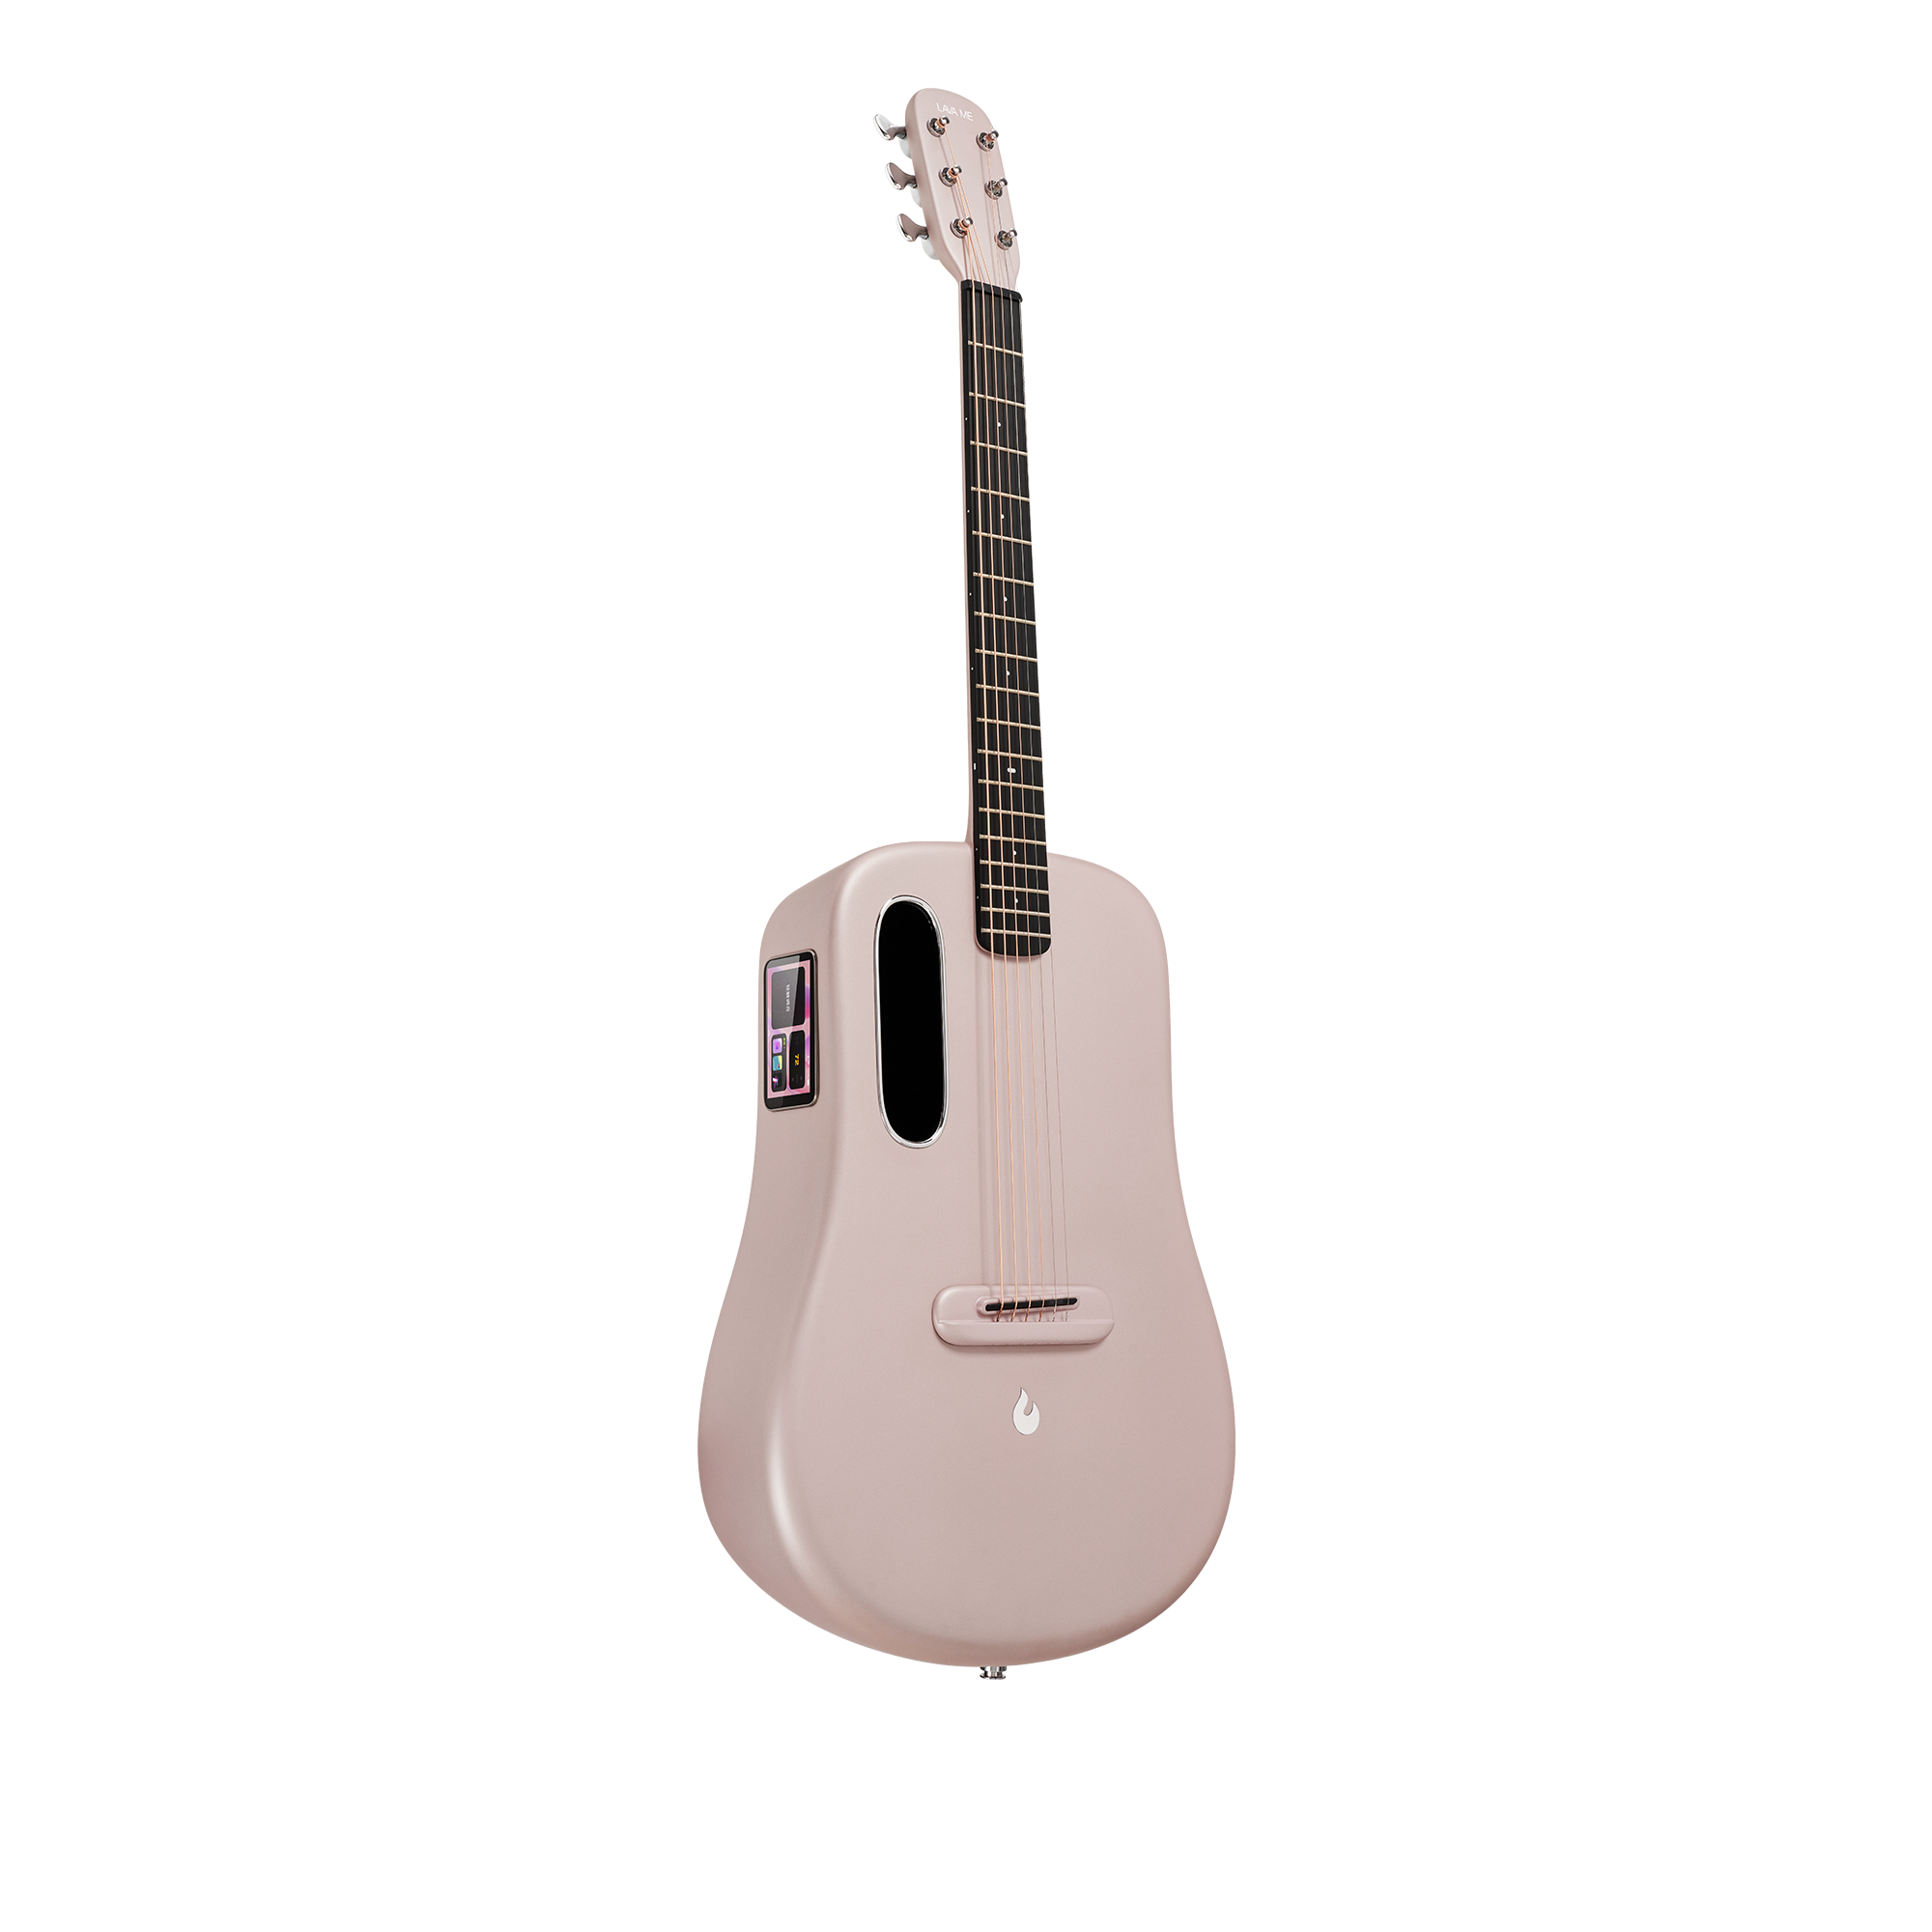 Lava Me 3 38inch Carbon Fiber Smart Guitar with Space Bag - Pink